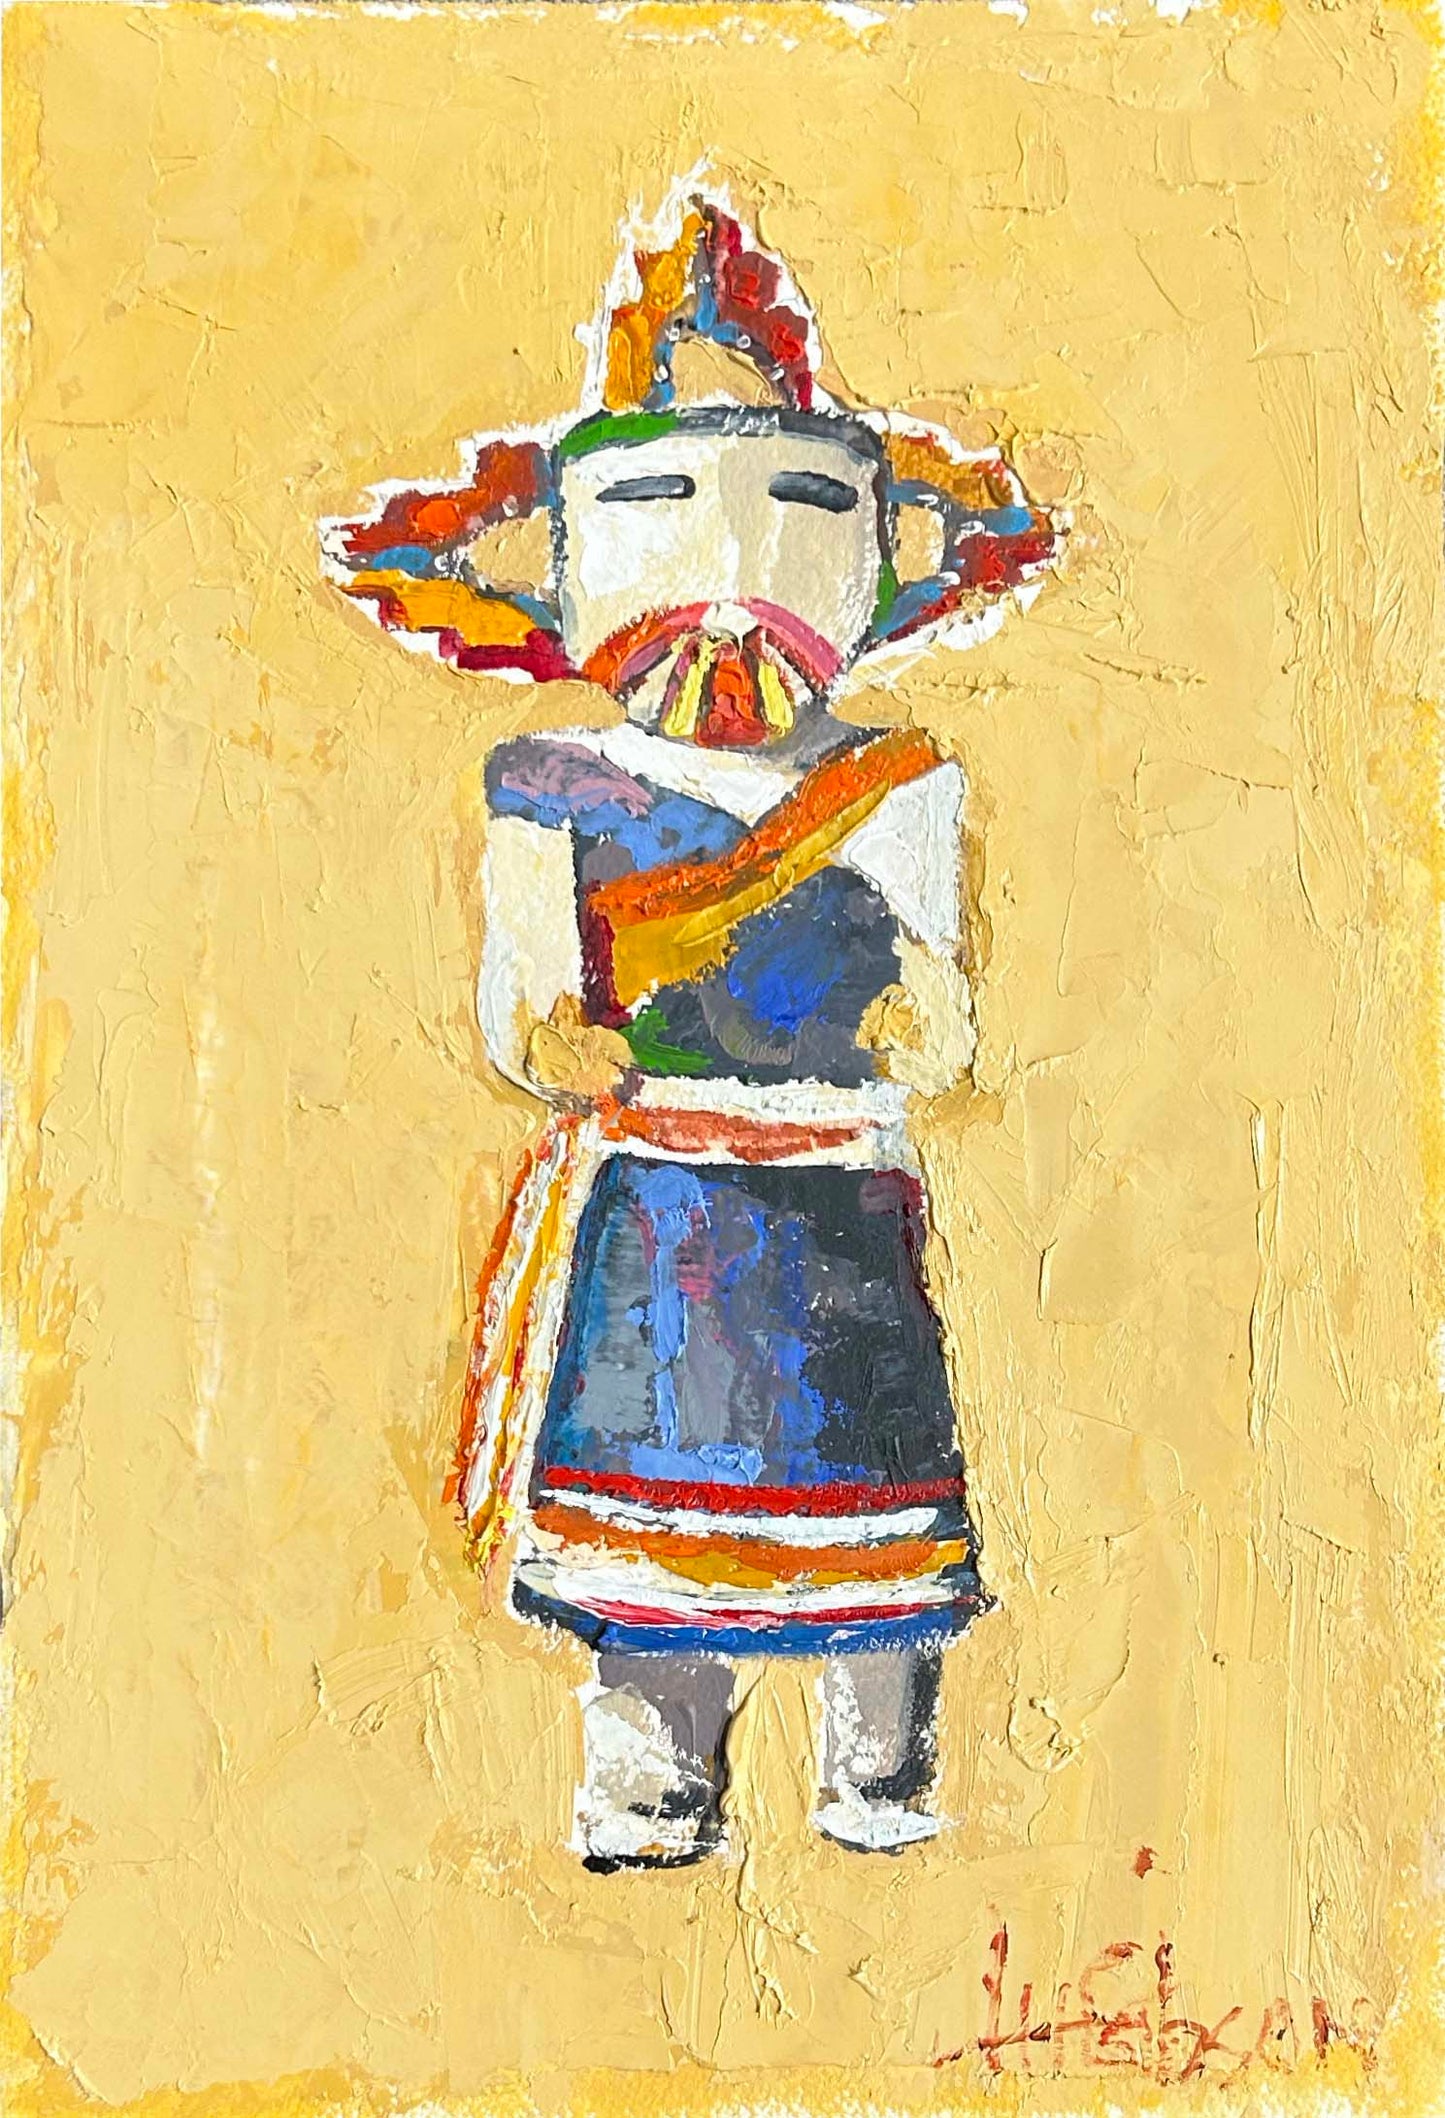 Kachina Doll with Colorful Beard